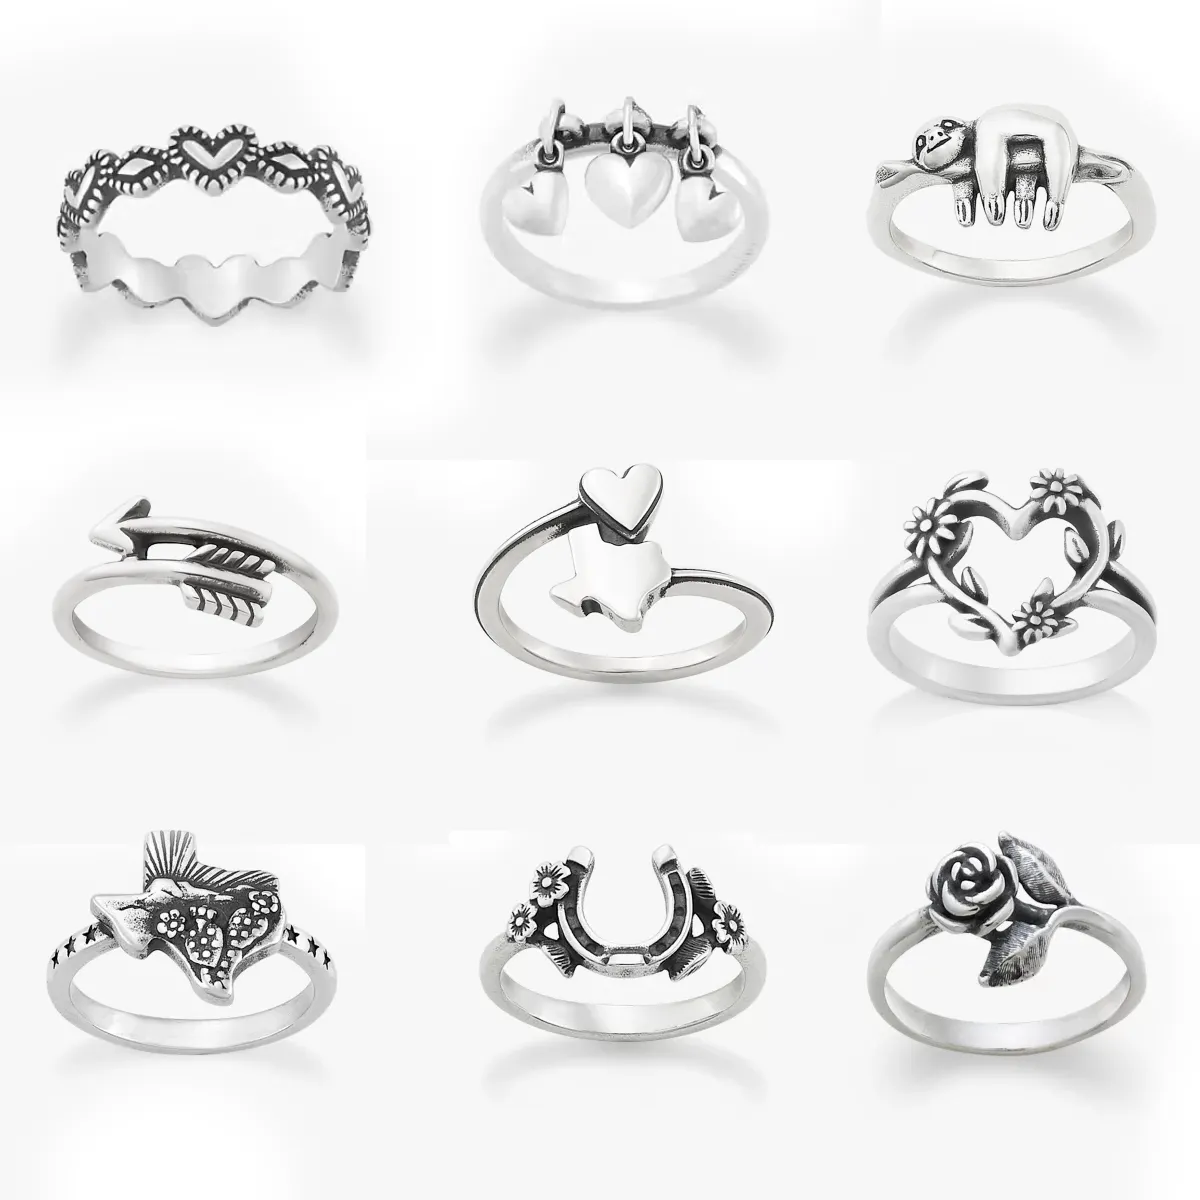 Anello all'ingrosso in argento 925 Sterling nuovo Design cuore anello infinito anello in argento antico per le donne